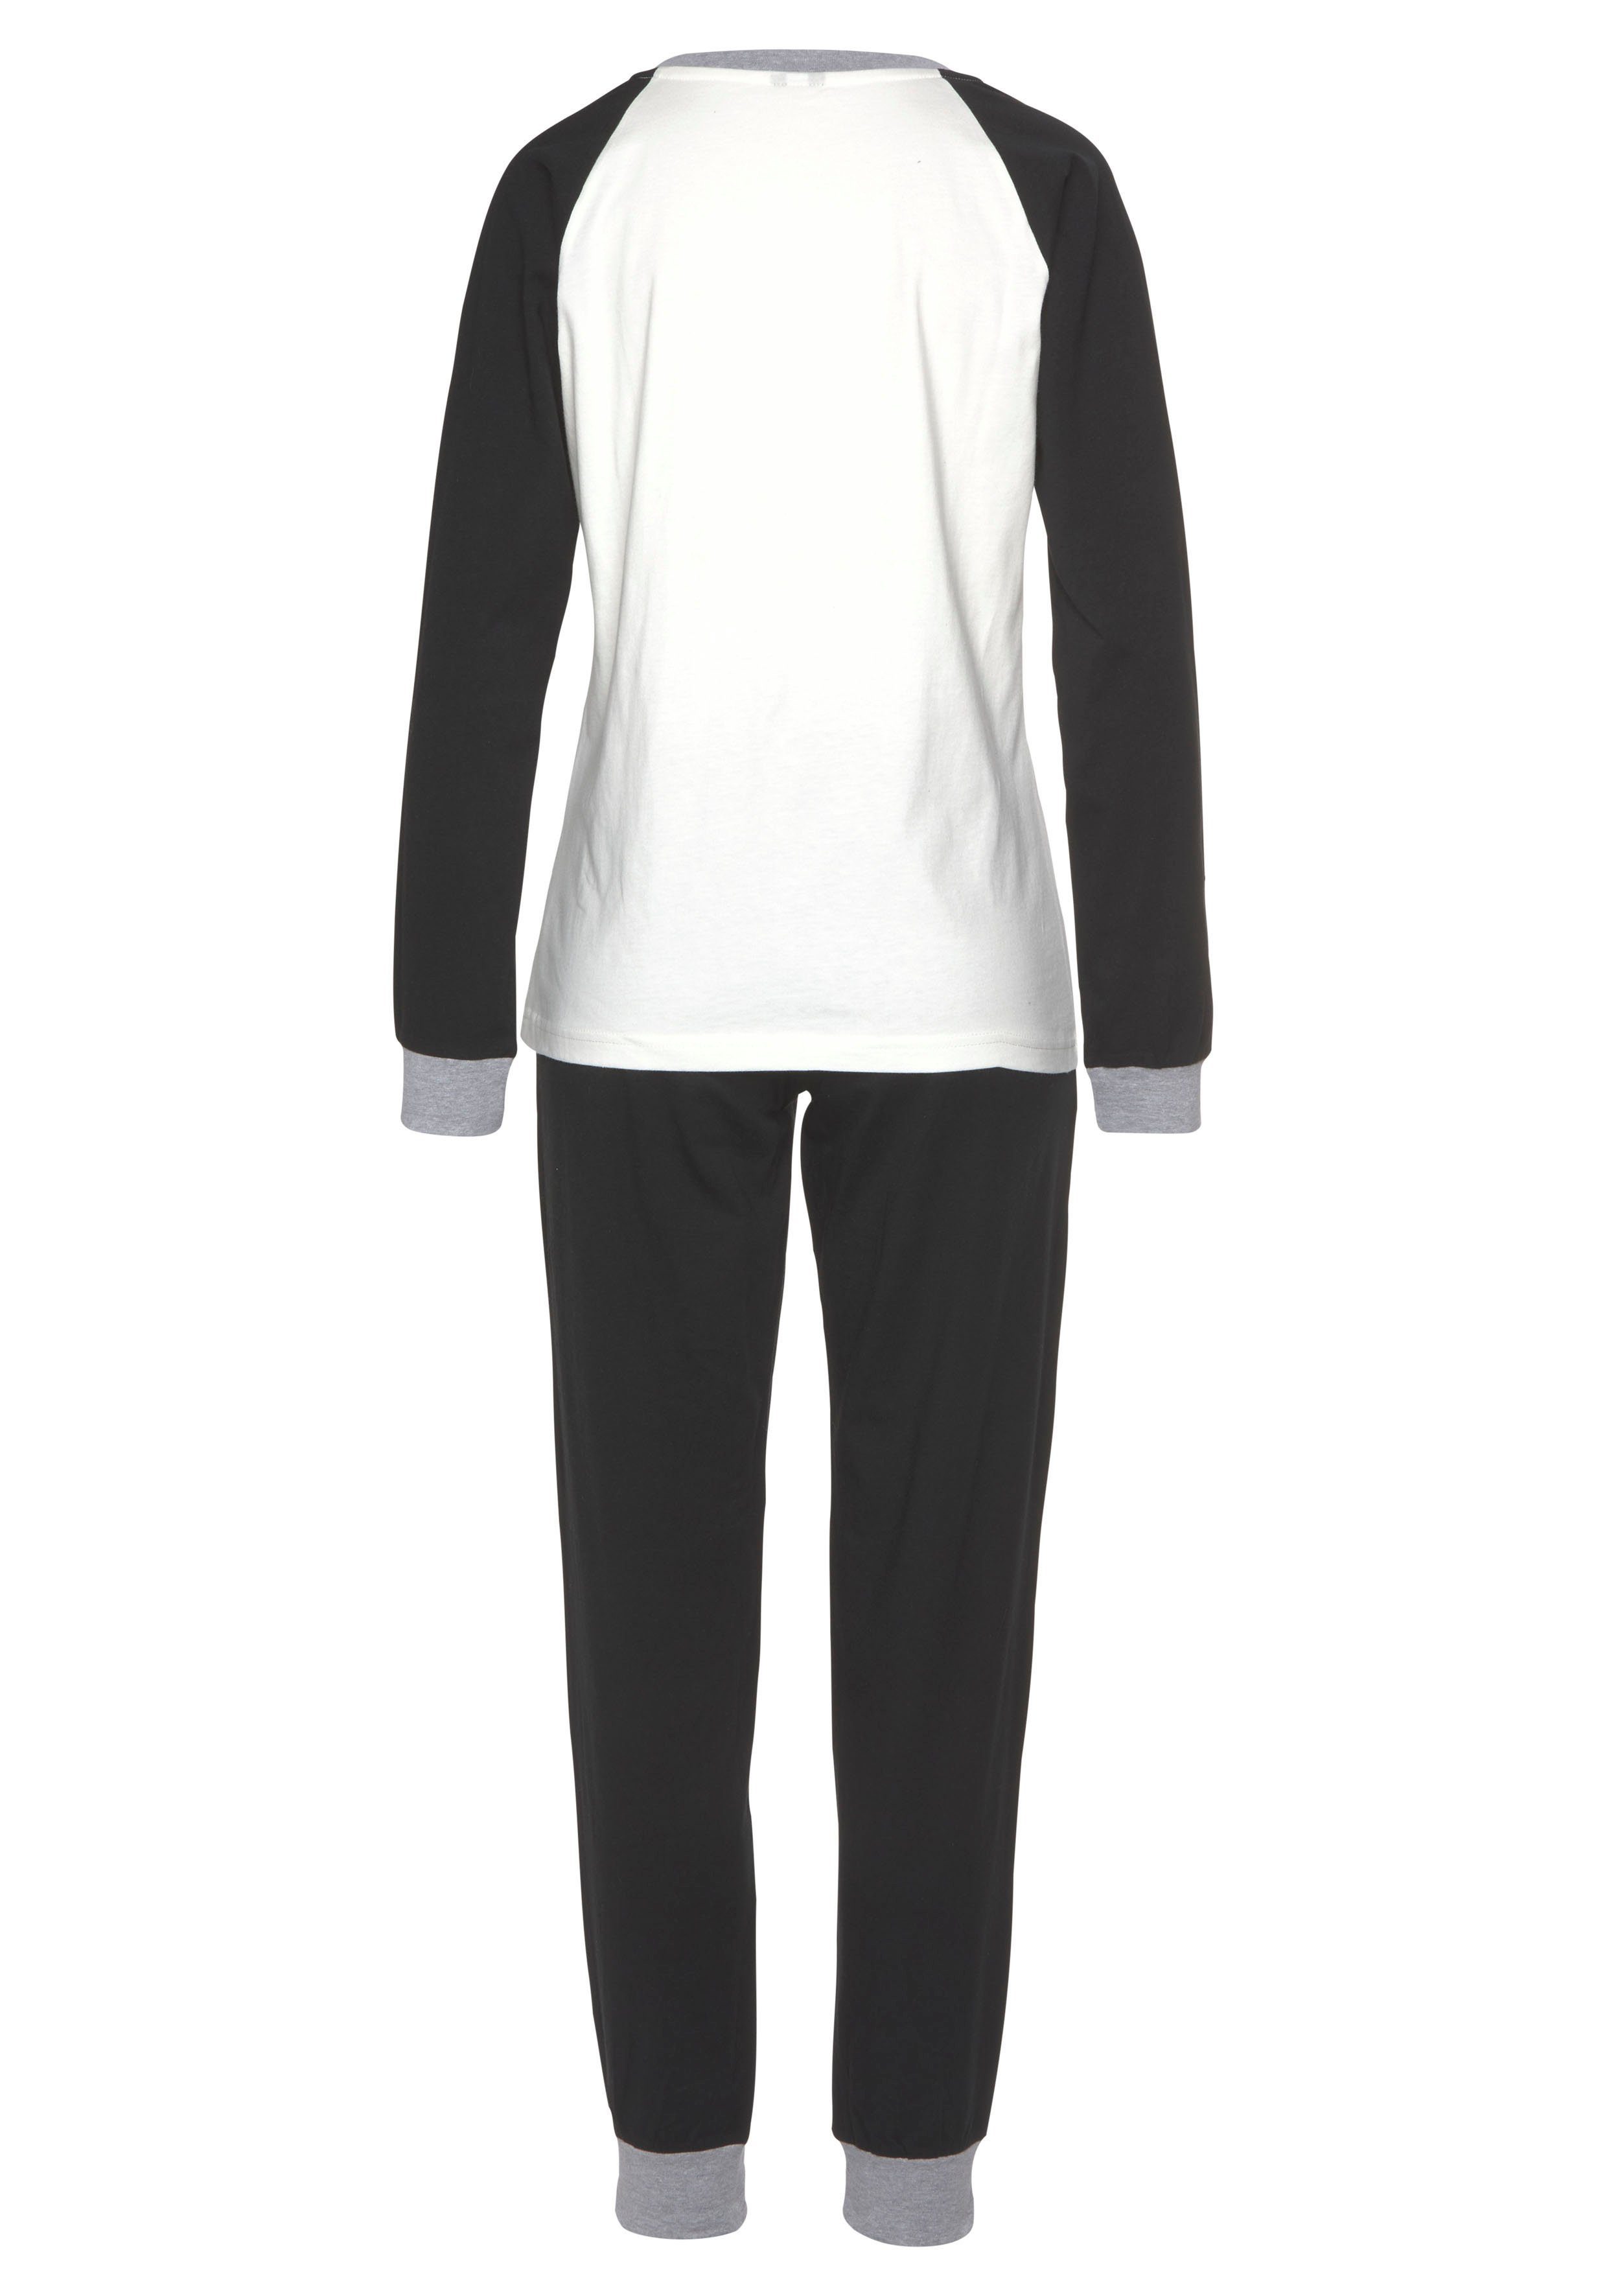 Stück) mit (2 tlg., schwarz-weiß KangaROOS Pyjama kontrastfarbenen 1 Raglanärmeln